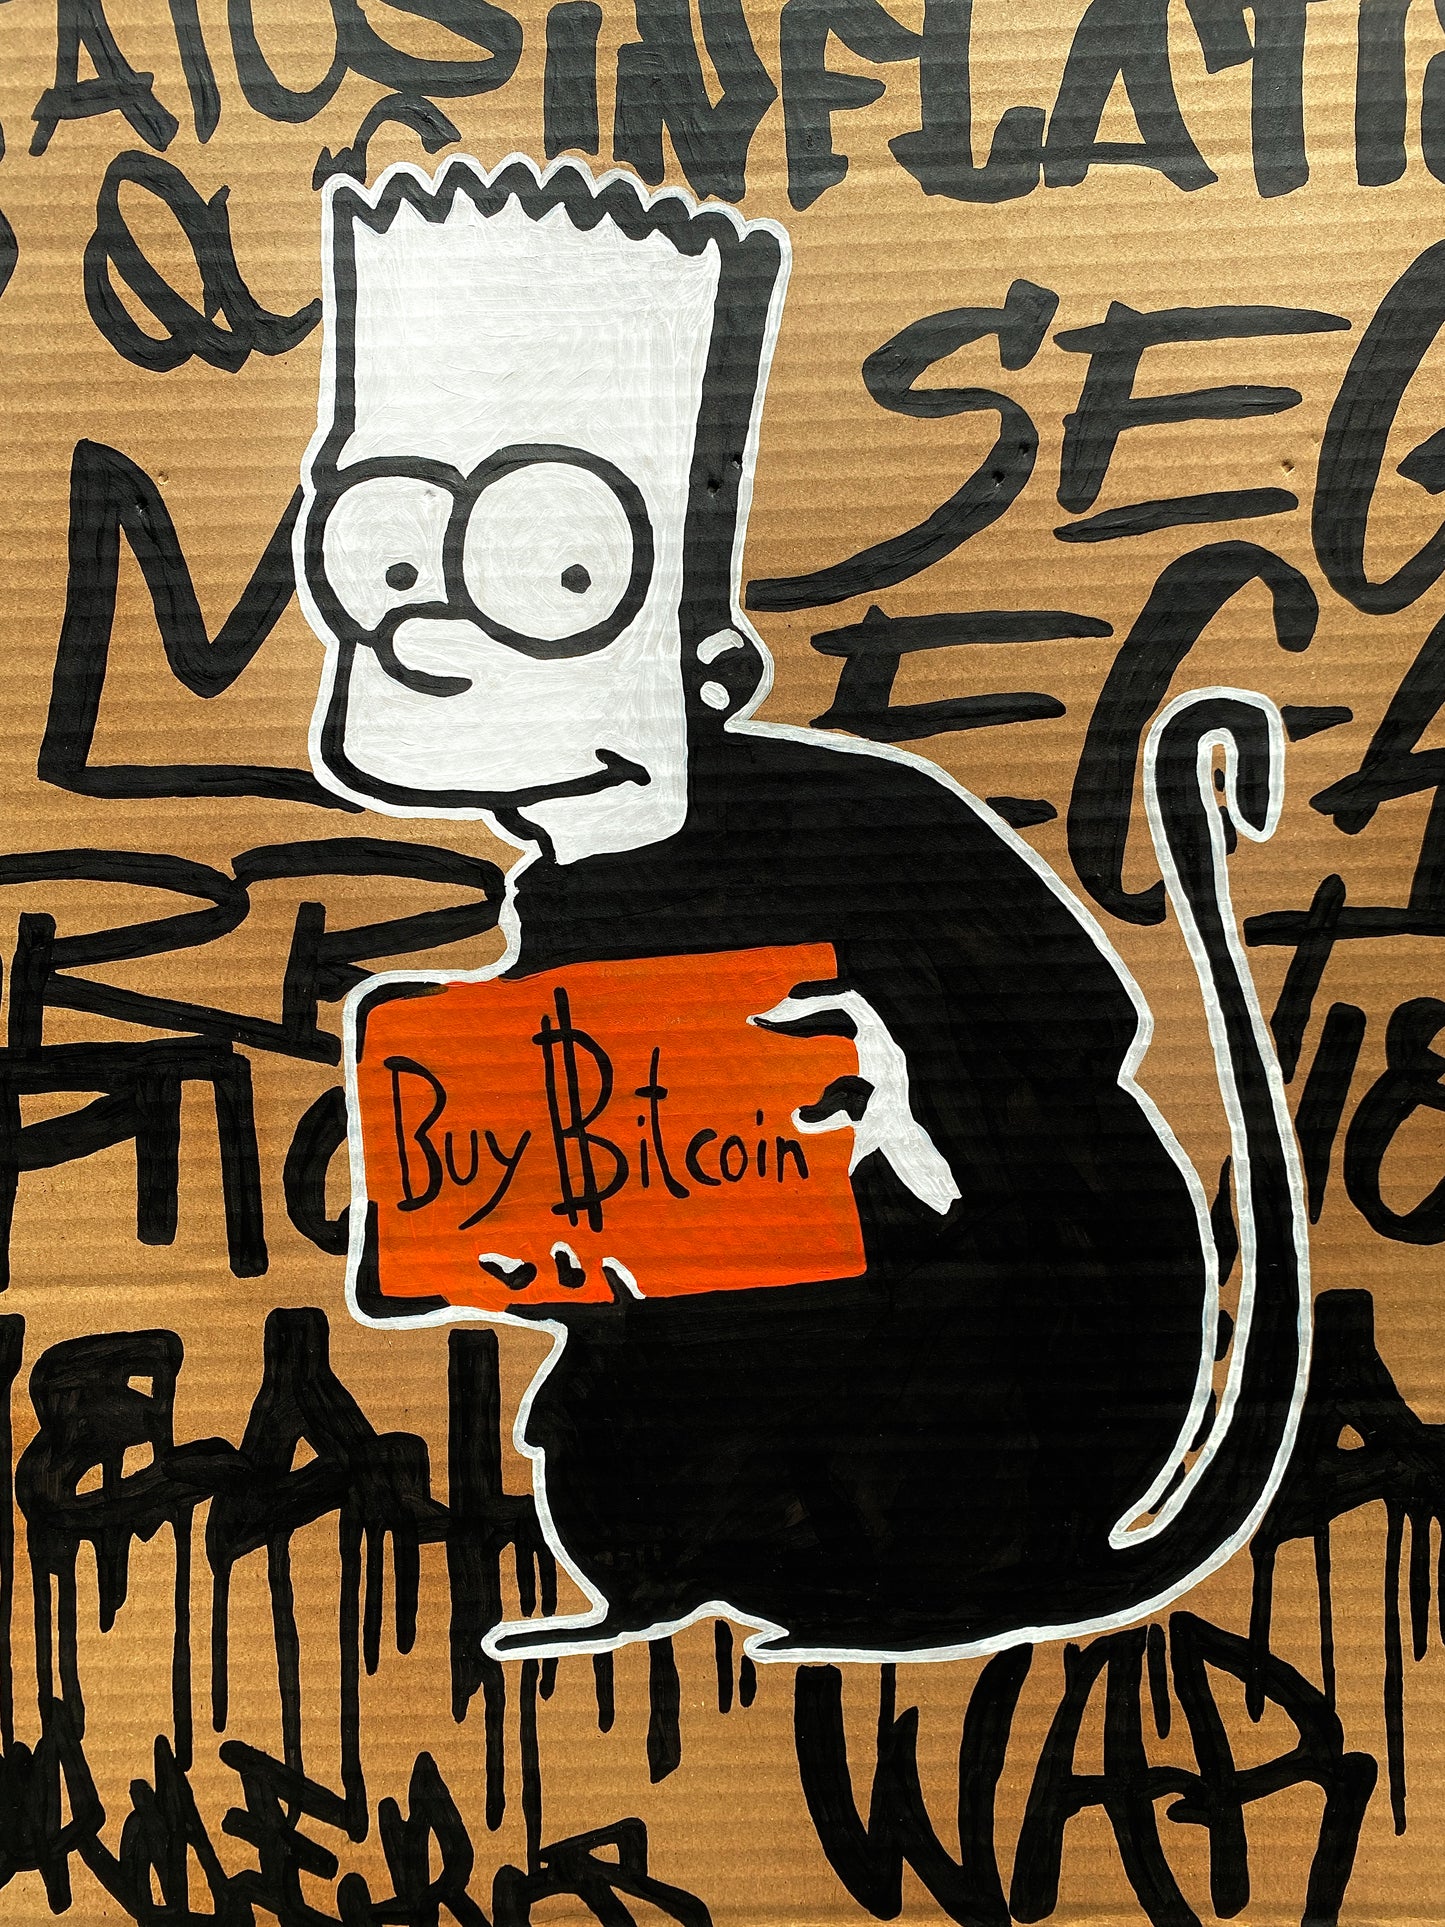 Acrylic Paint on Cardboard Bart "Buy Bitcoin"